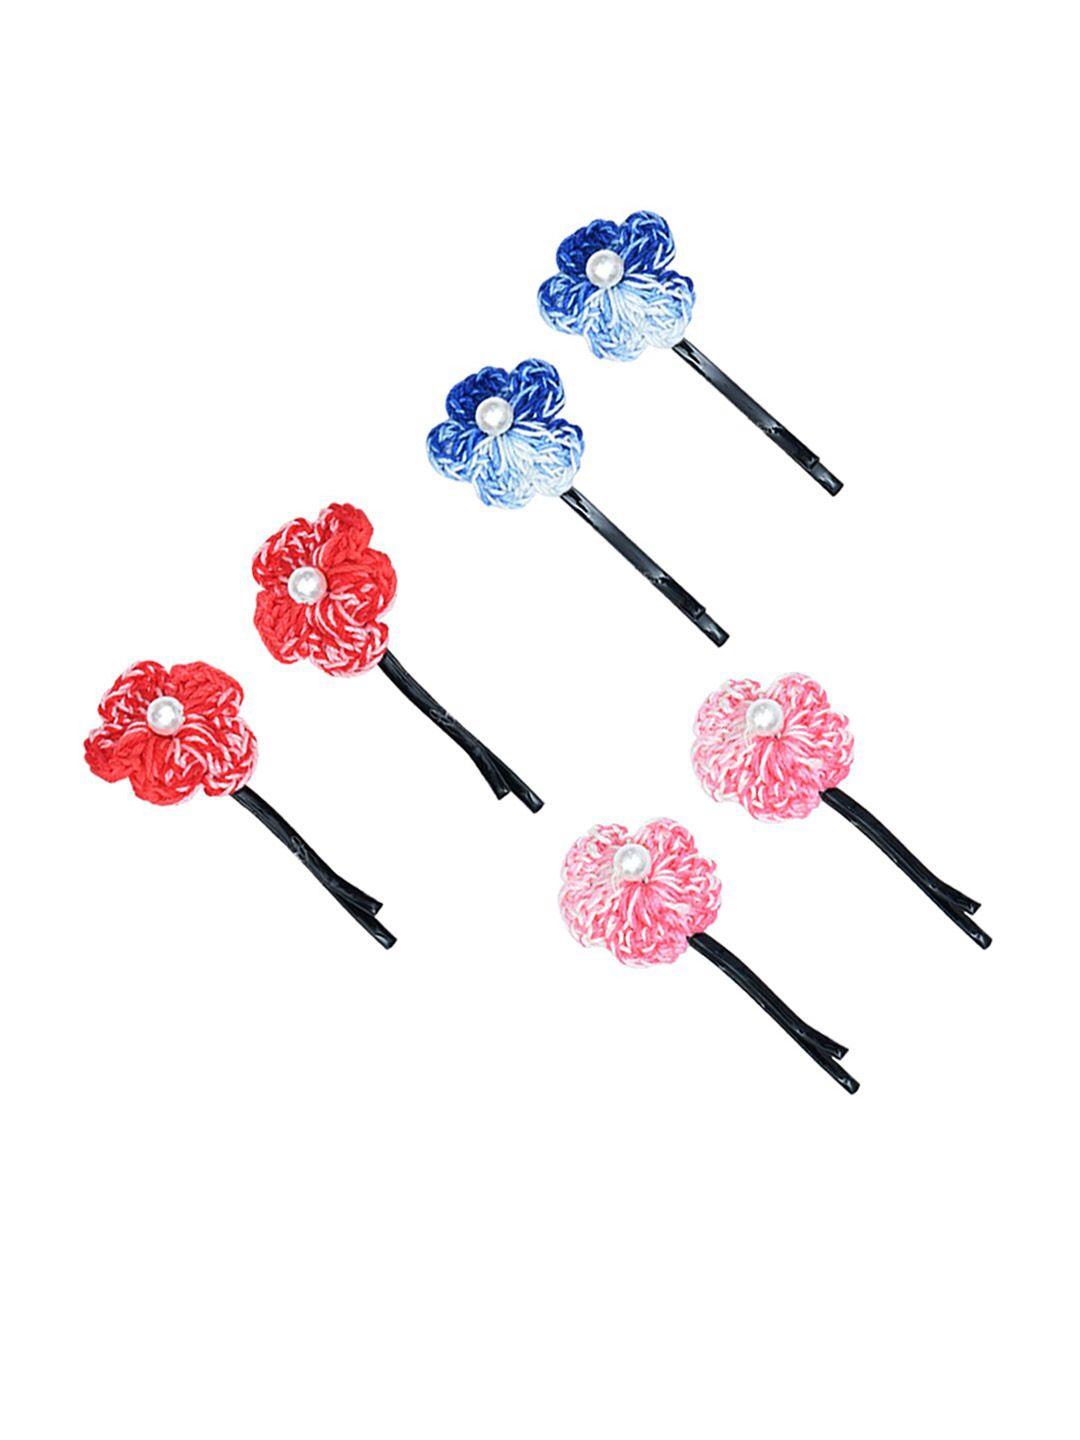 funkrafts girls set of 6 red & blue beaded bobby pins